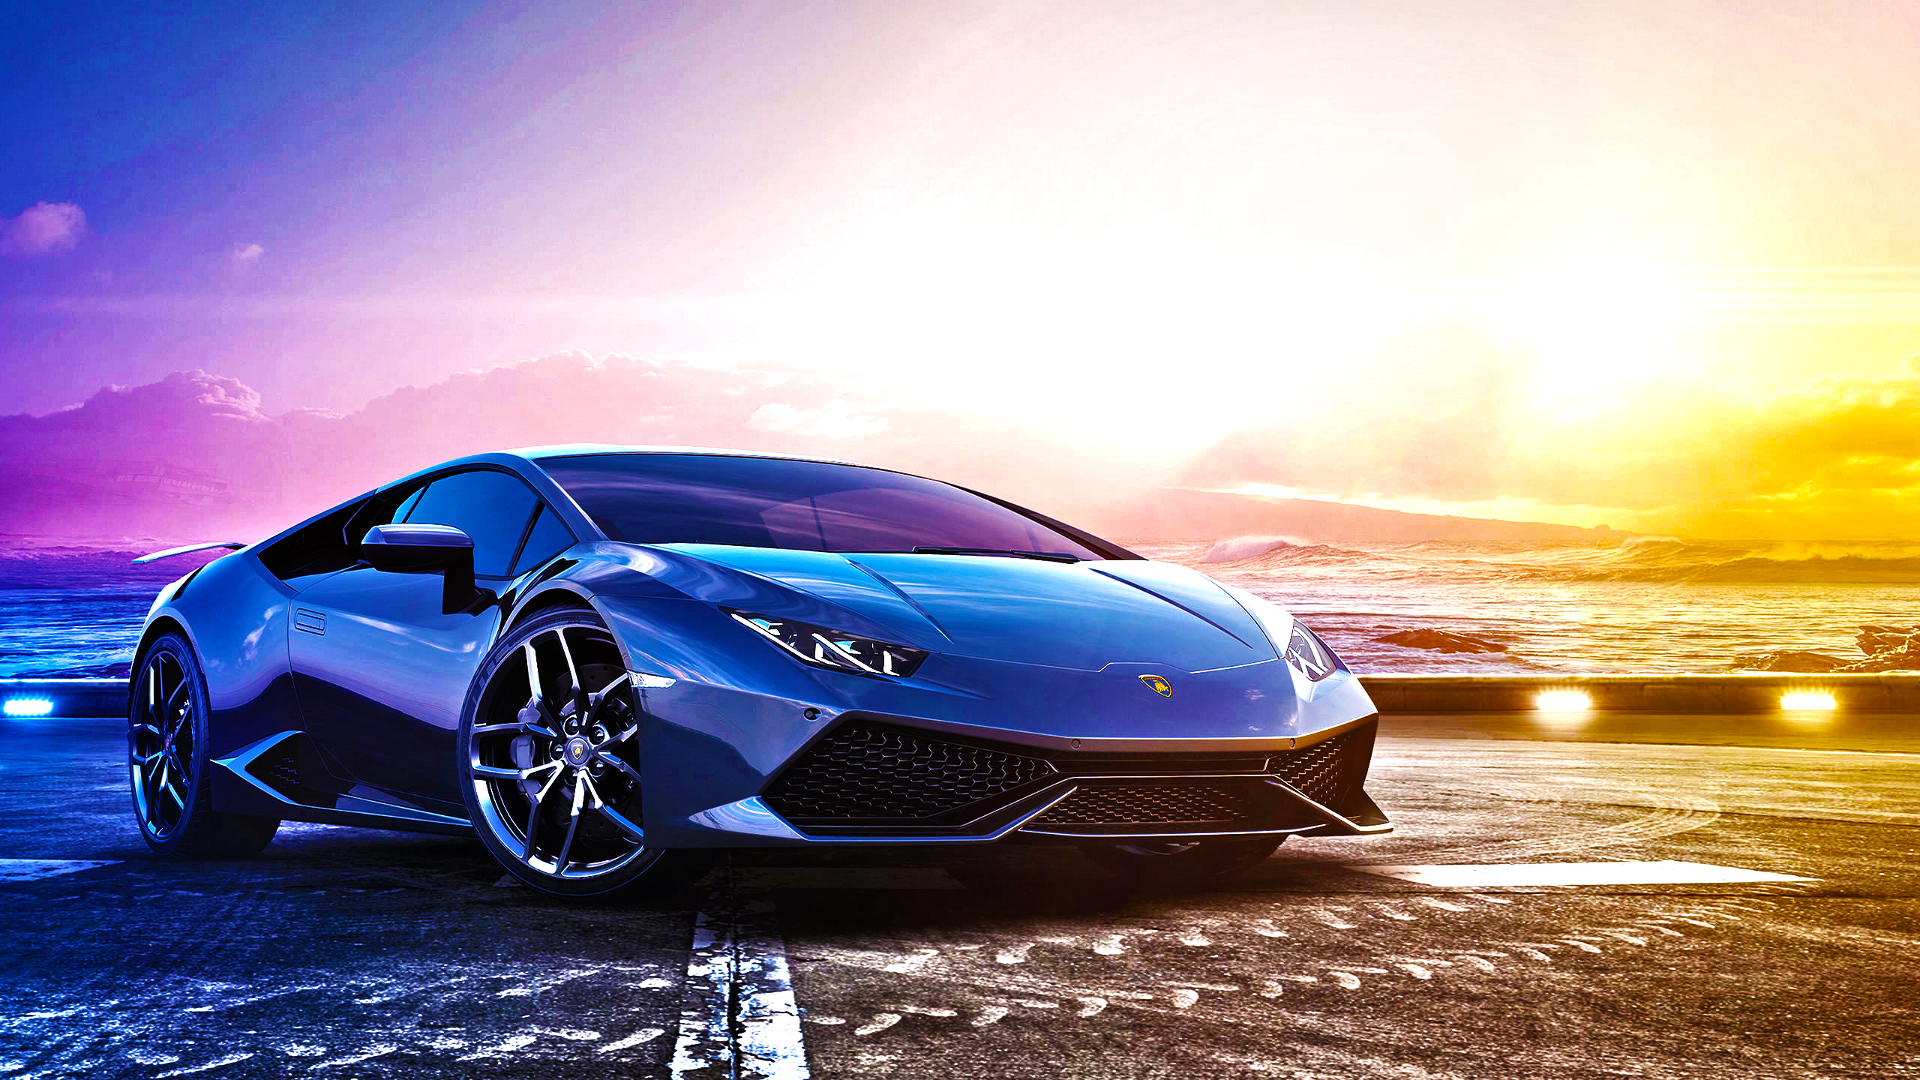 Lamborghini HD Wallpaper | Background Image | 1920x1080 ...